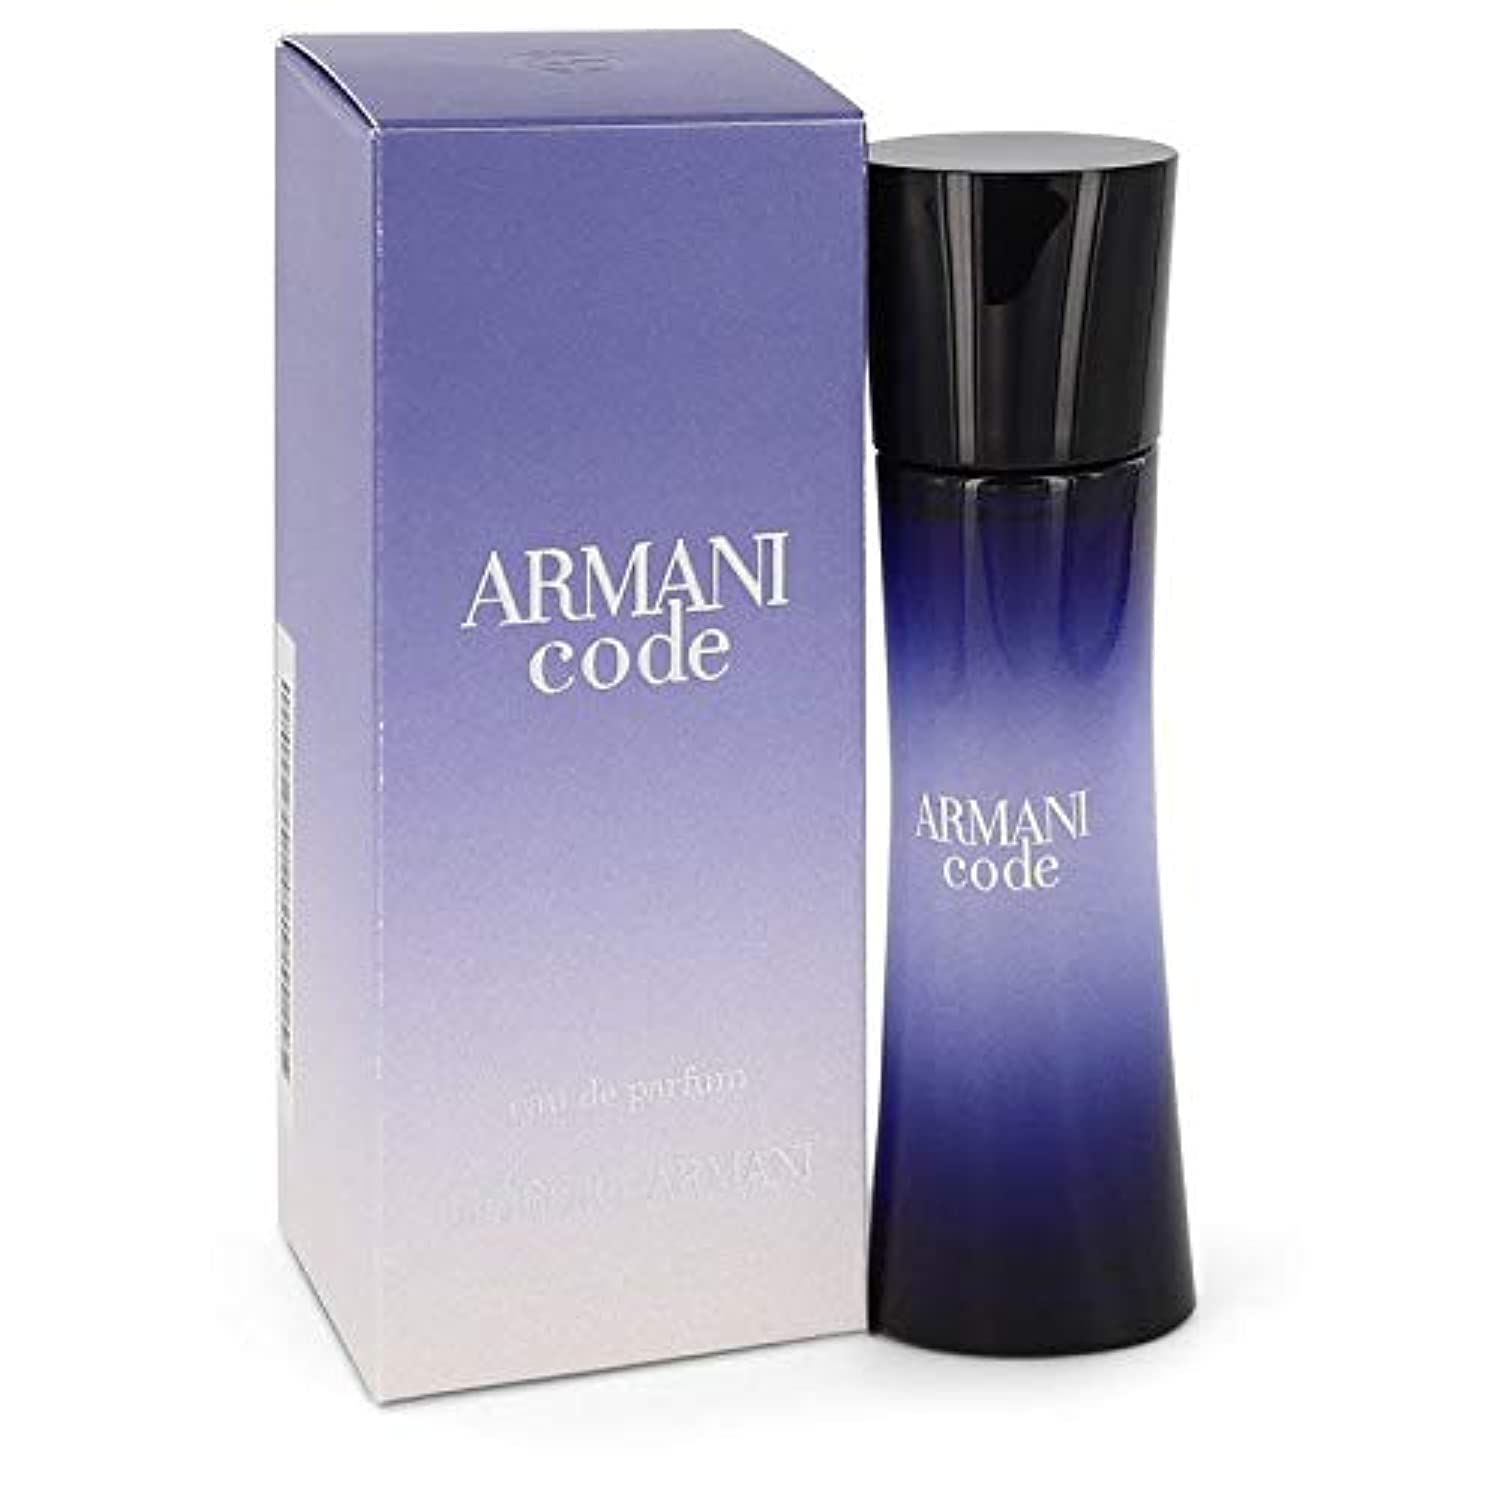 Armani woman. Armani code Perfume. Giorgio Armani code femme 30ml. Духи Giorgio Armani Armani code. Armani code 30ml EDP.